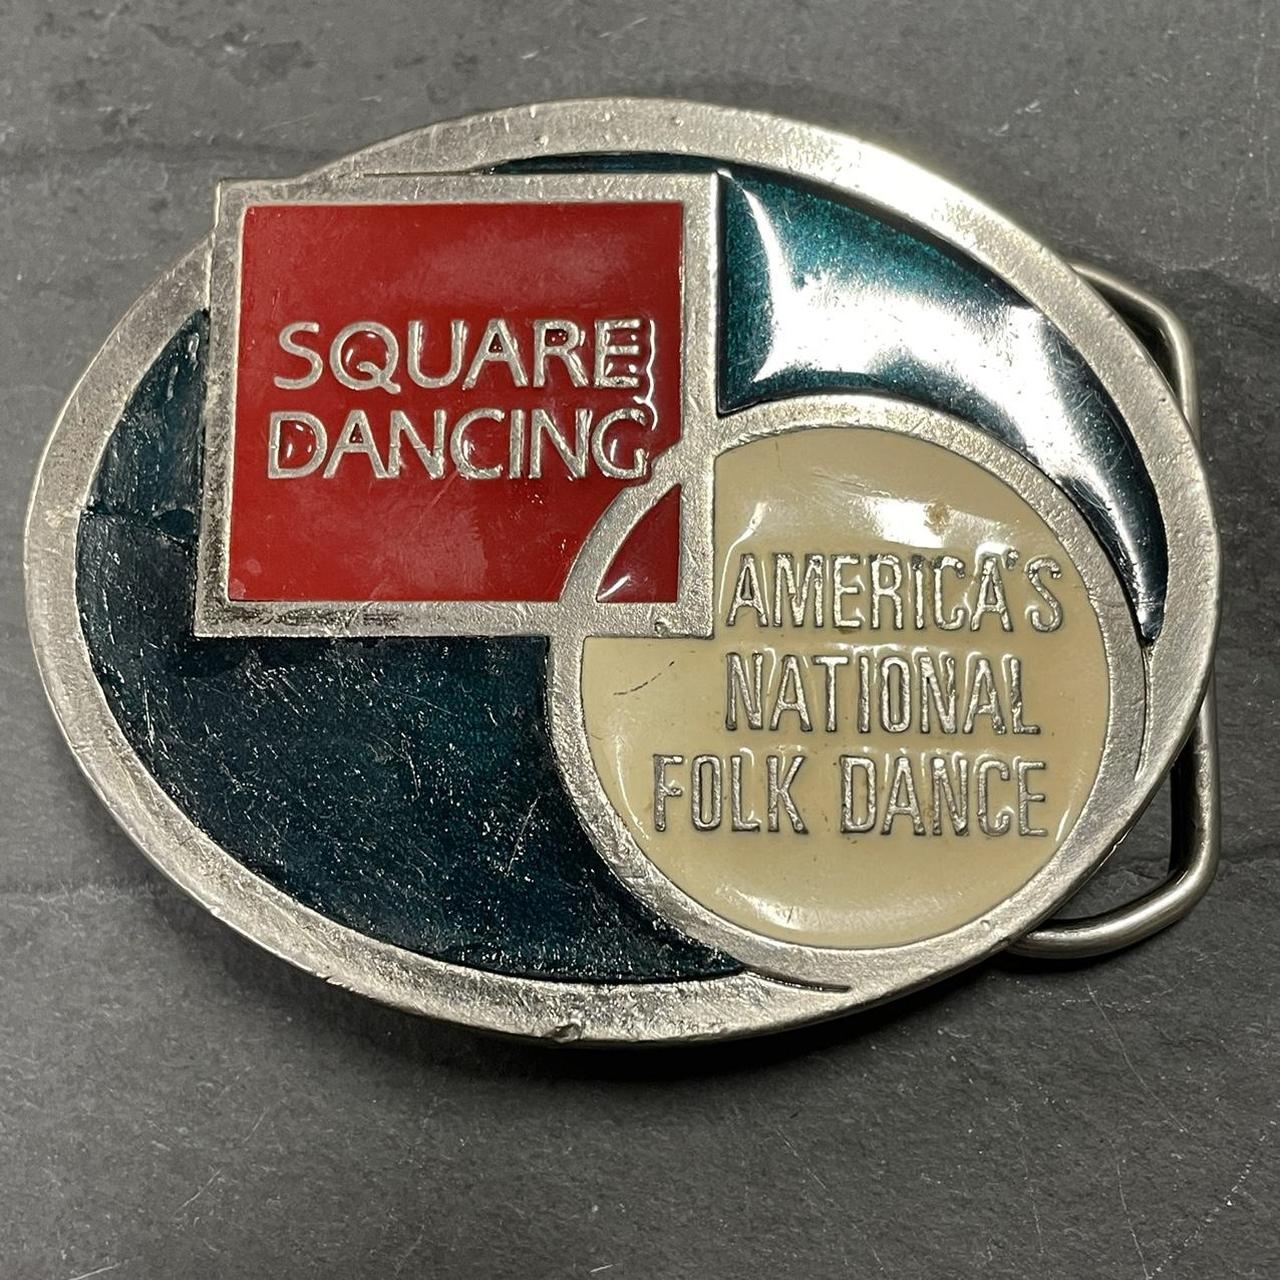 VINTAGE SQUARE DANCING Belt Buckle Folk Dance Collectible Western  Accessories 